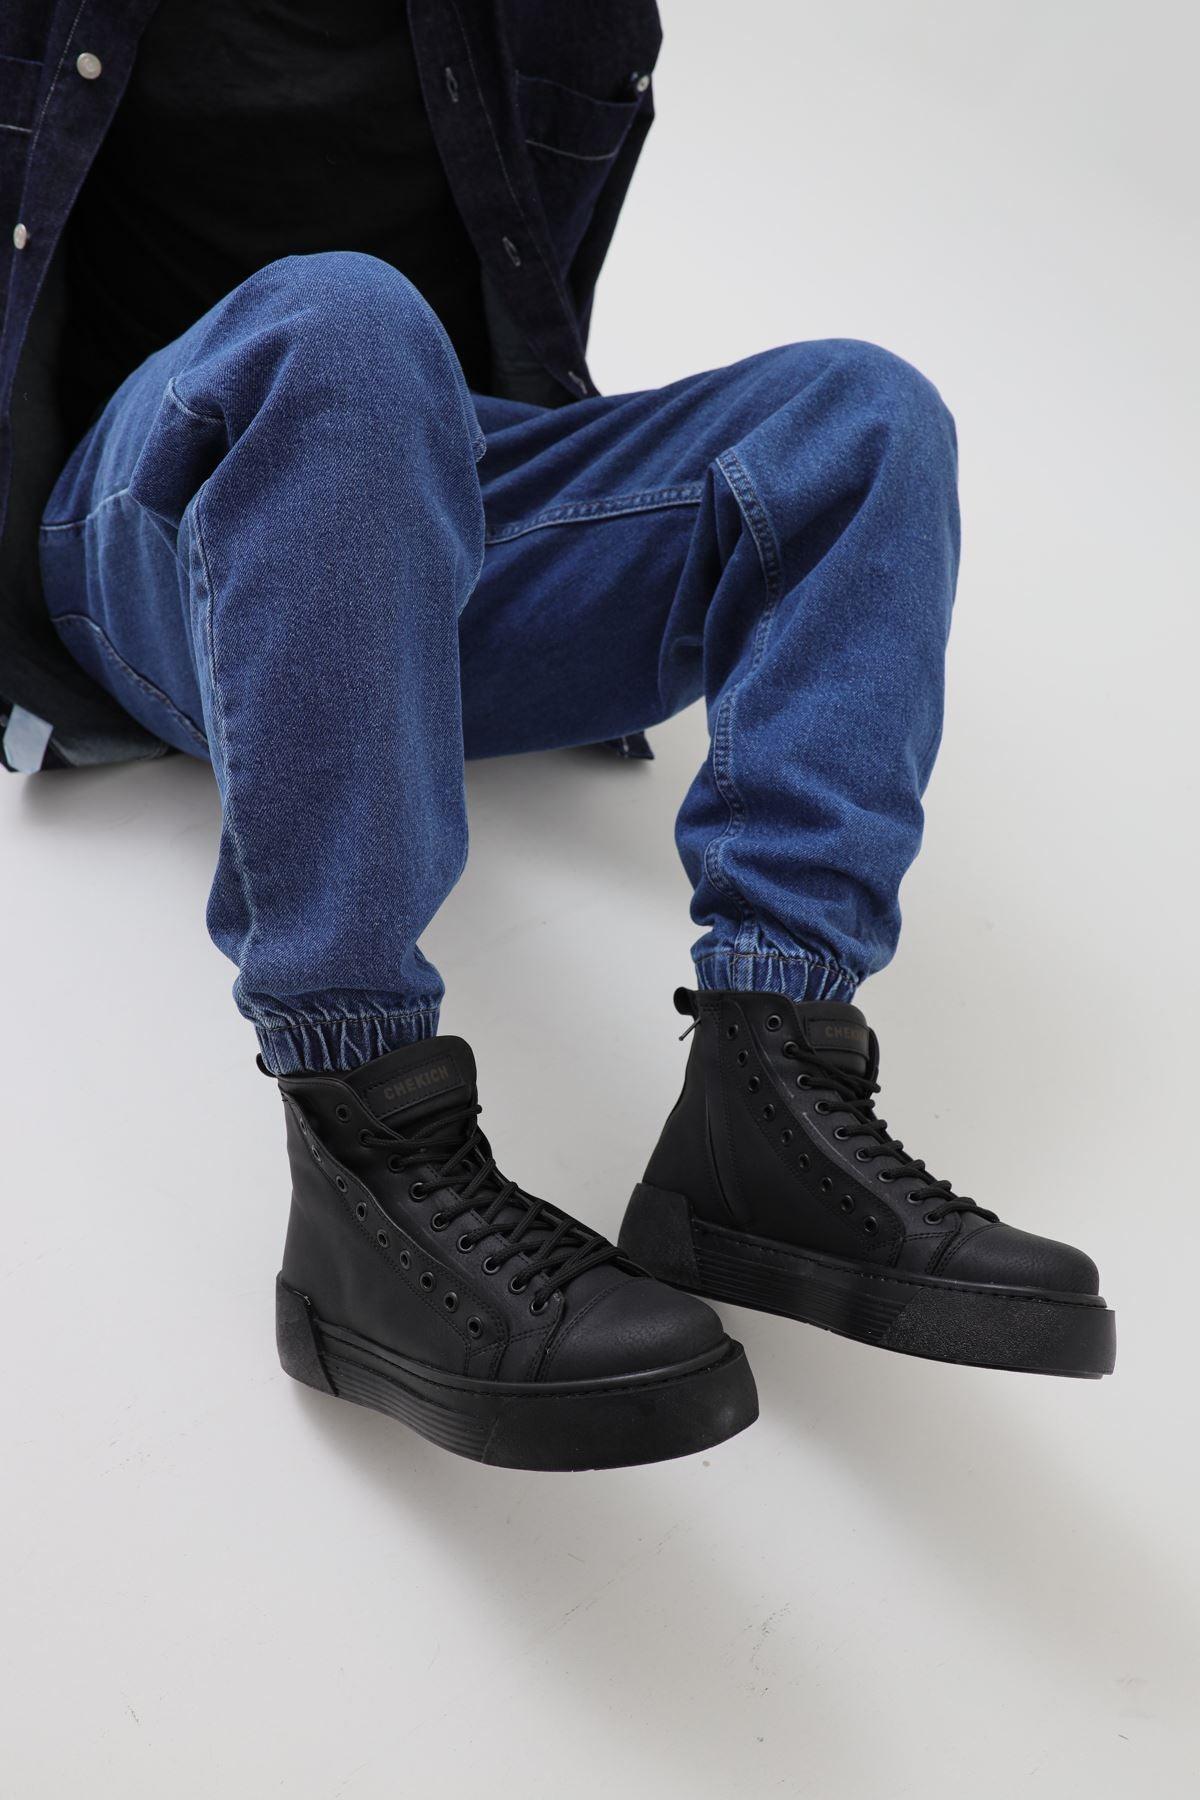 CH167 ST Men's Boots BLACK/BLACK - STREET MODE ™